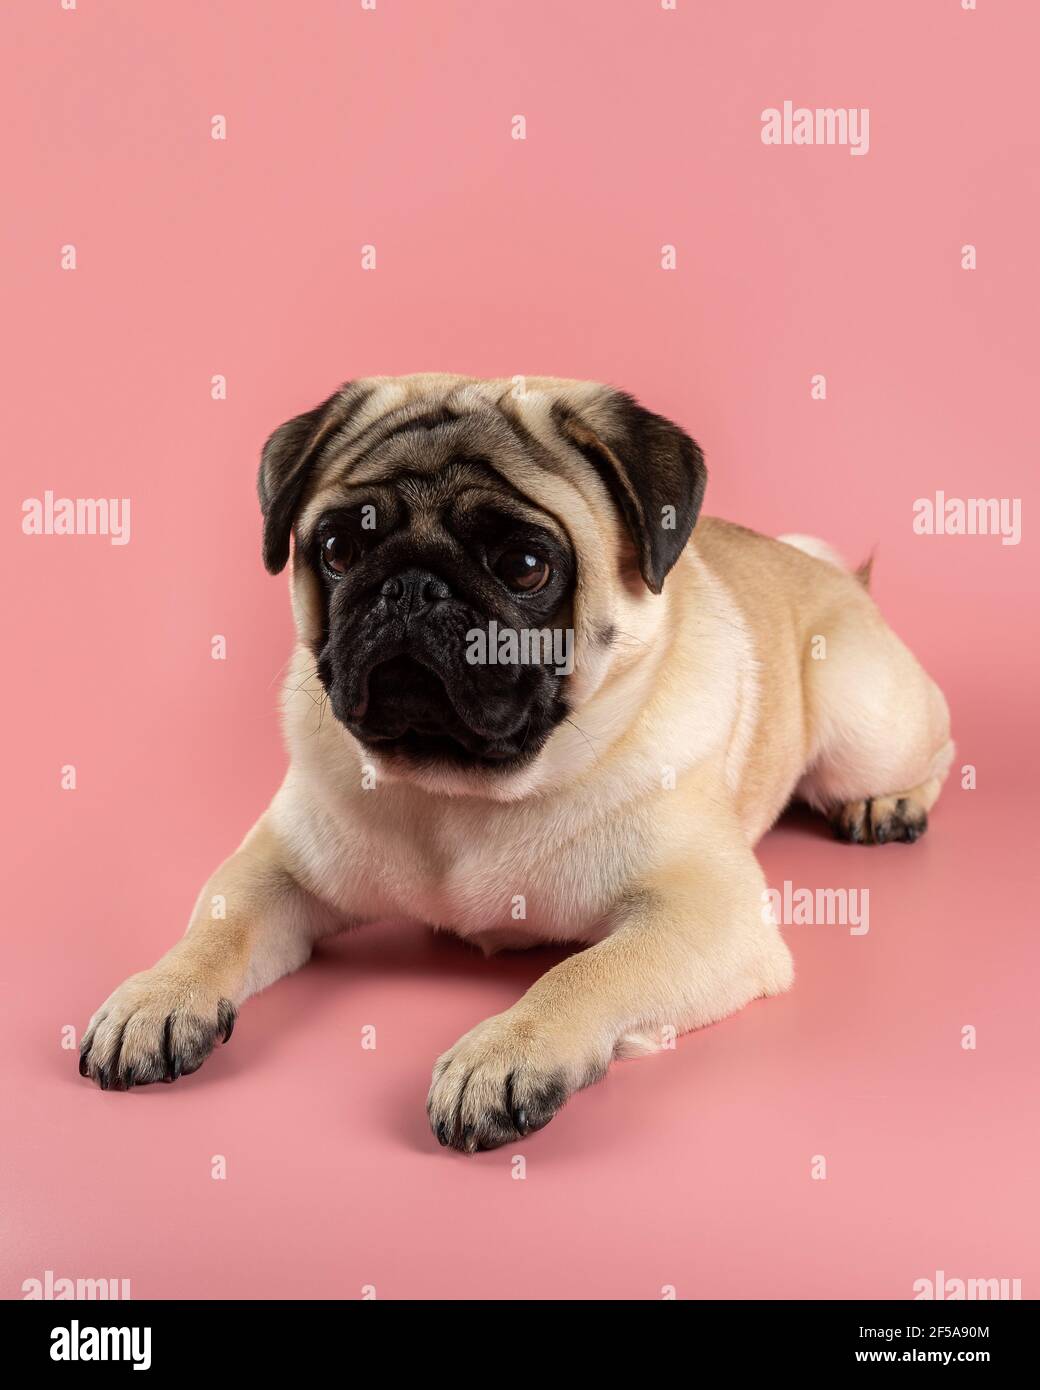 Cute Pug dog sitting on pink background. Stock Photo